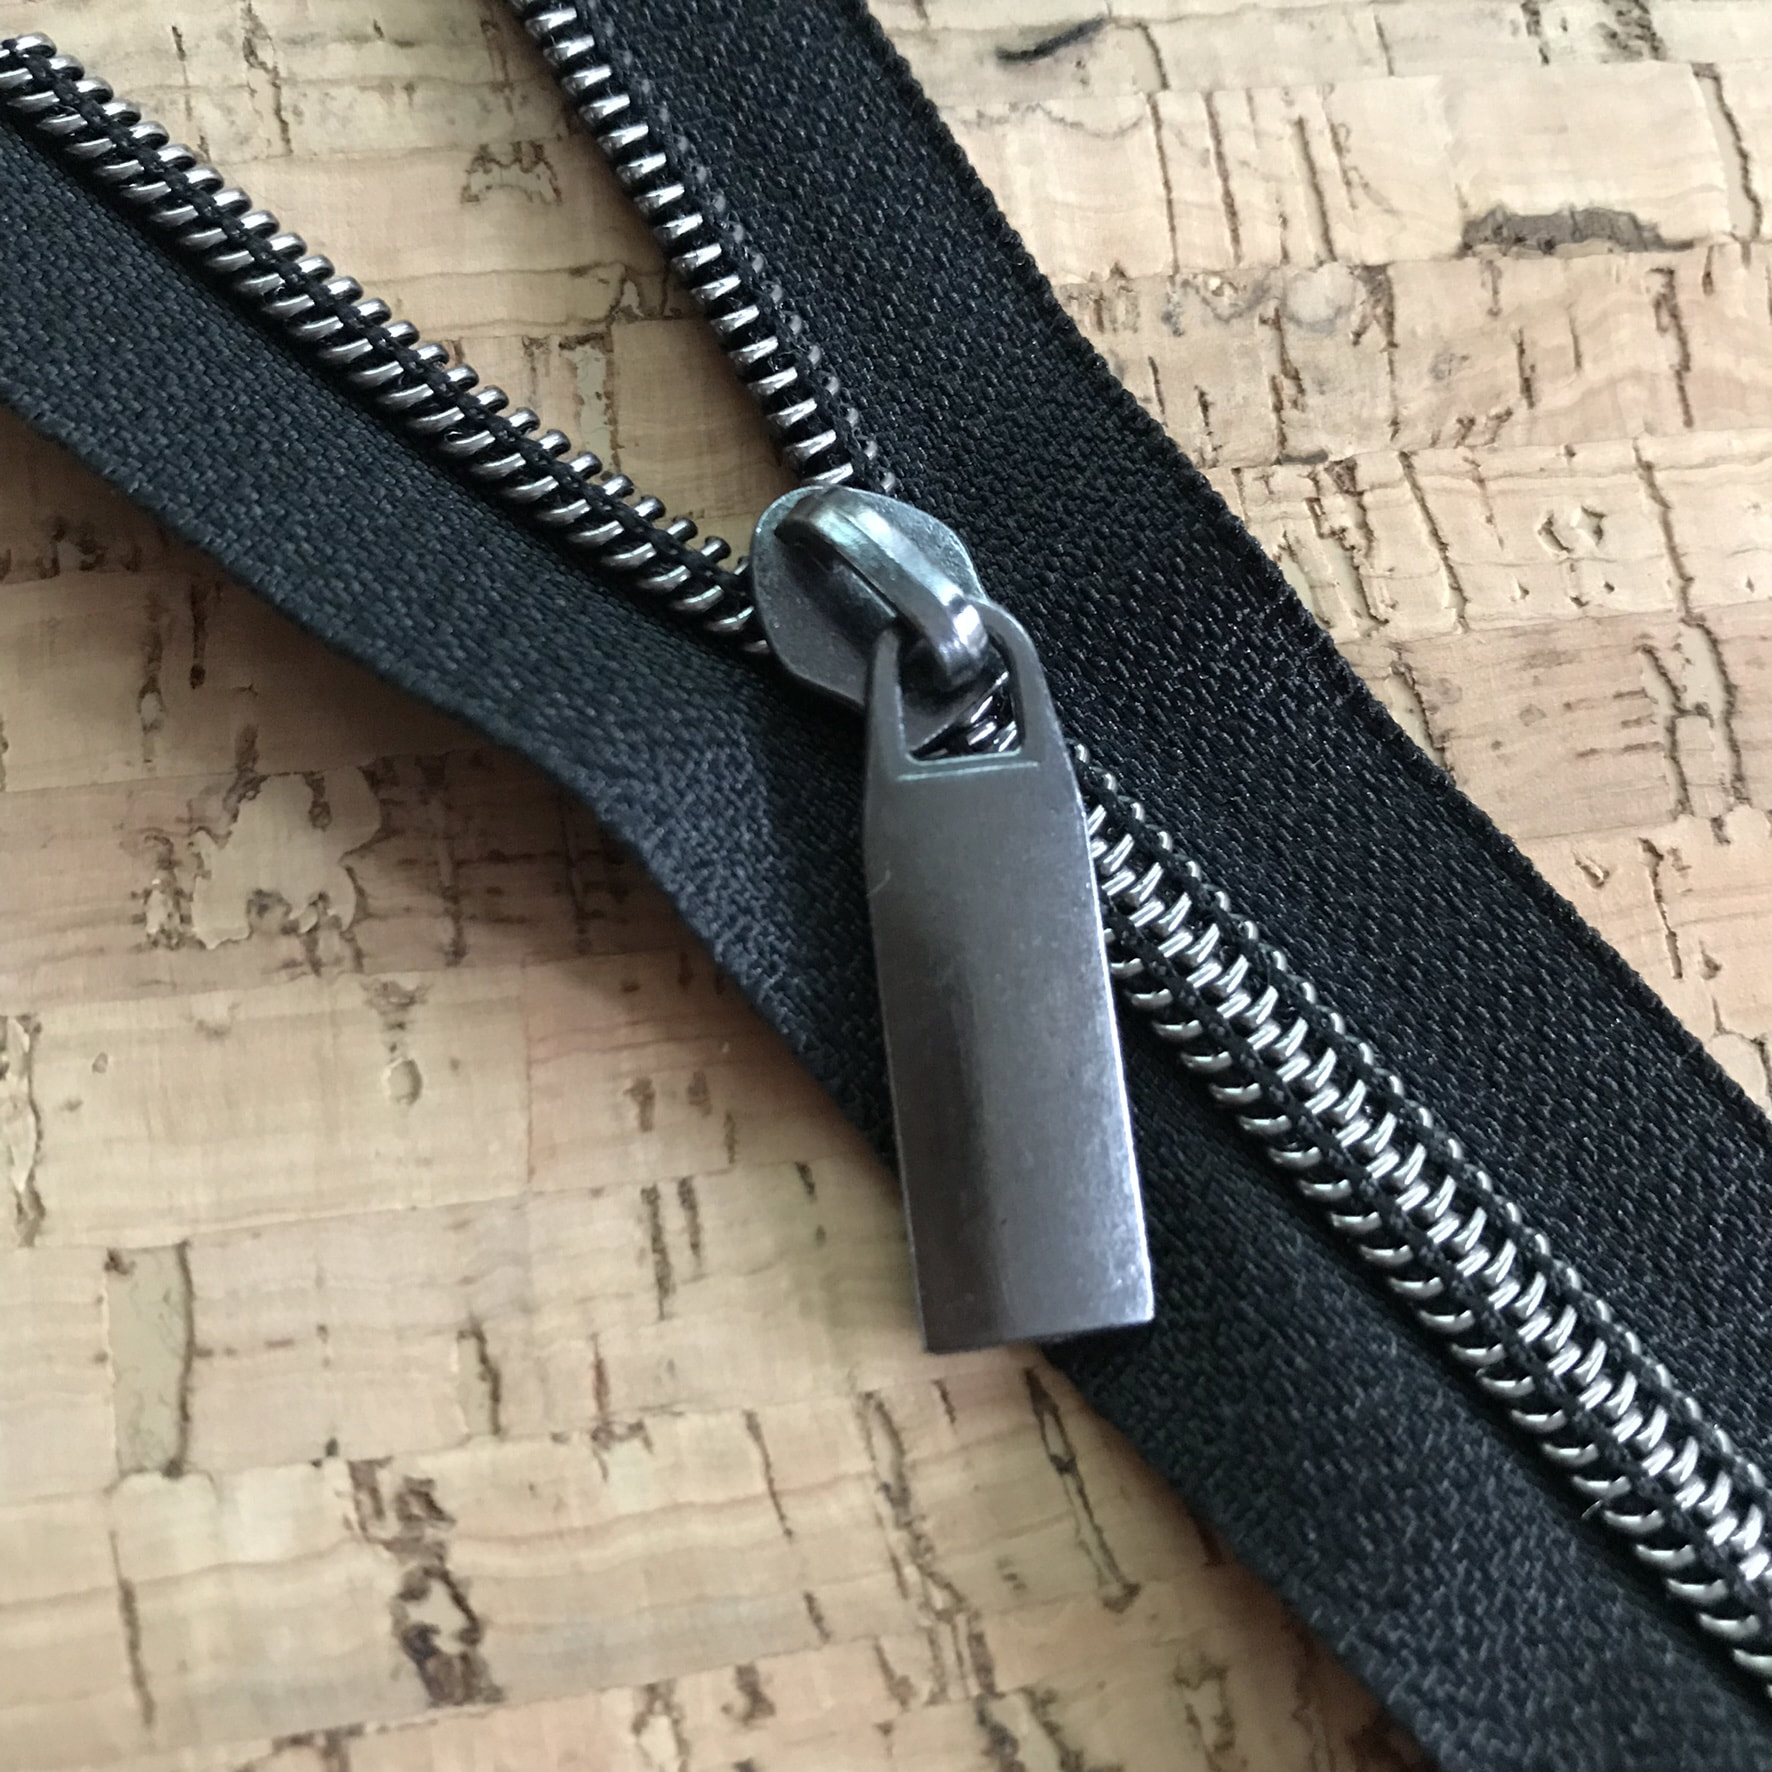 Zippers by the Yard Emerald — Fab Fabrics